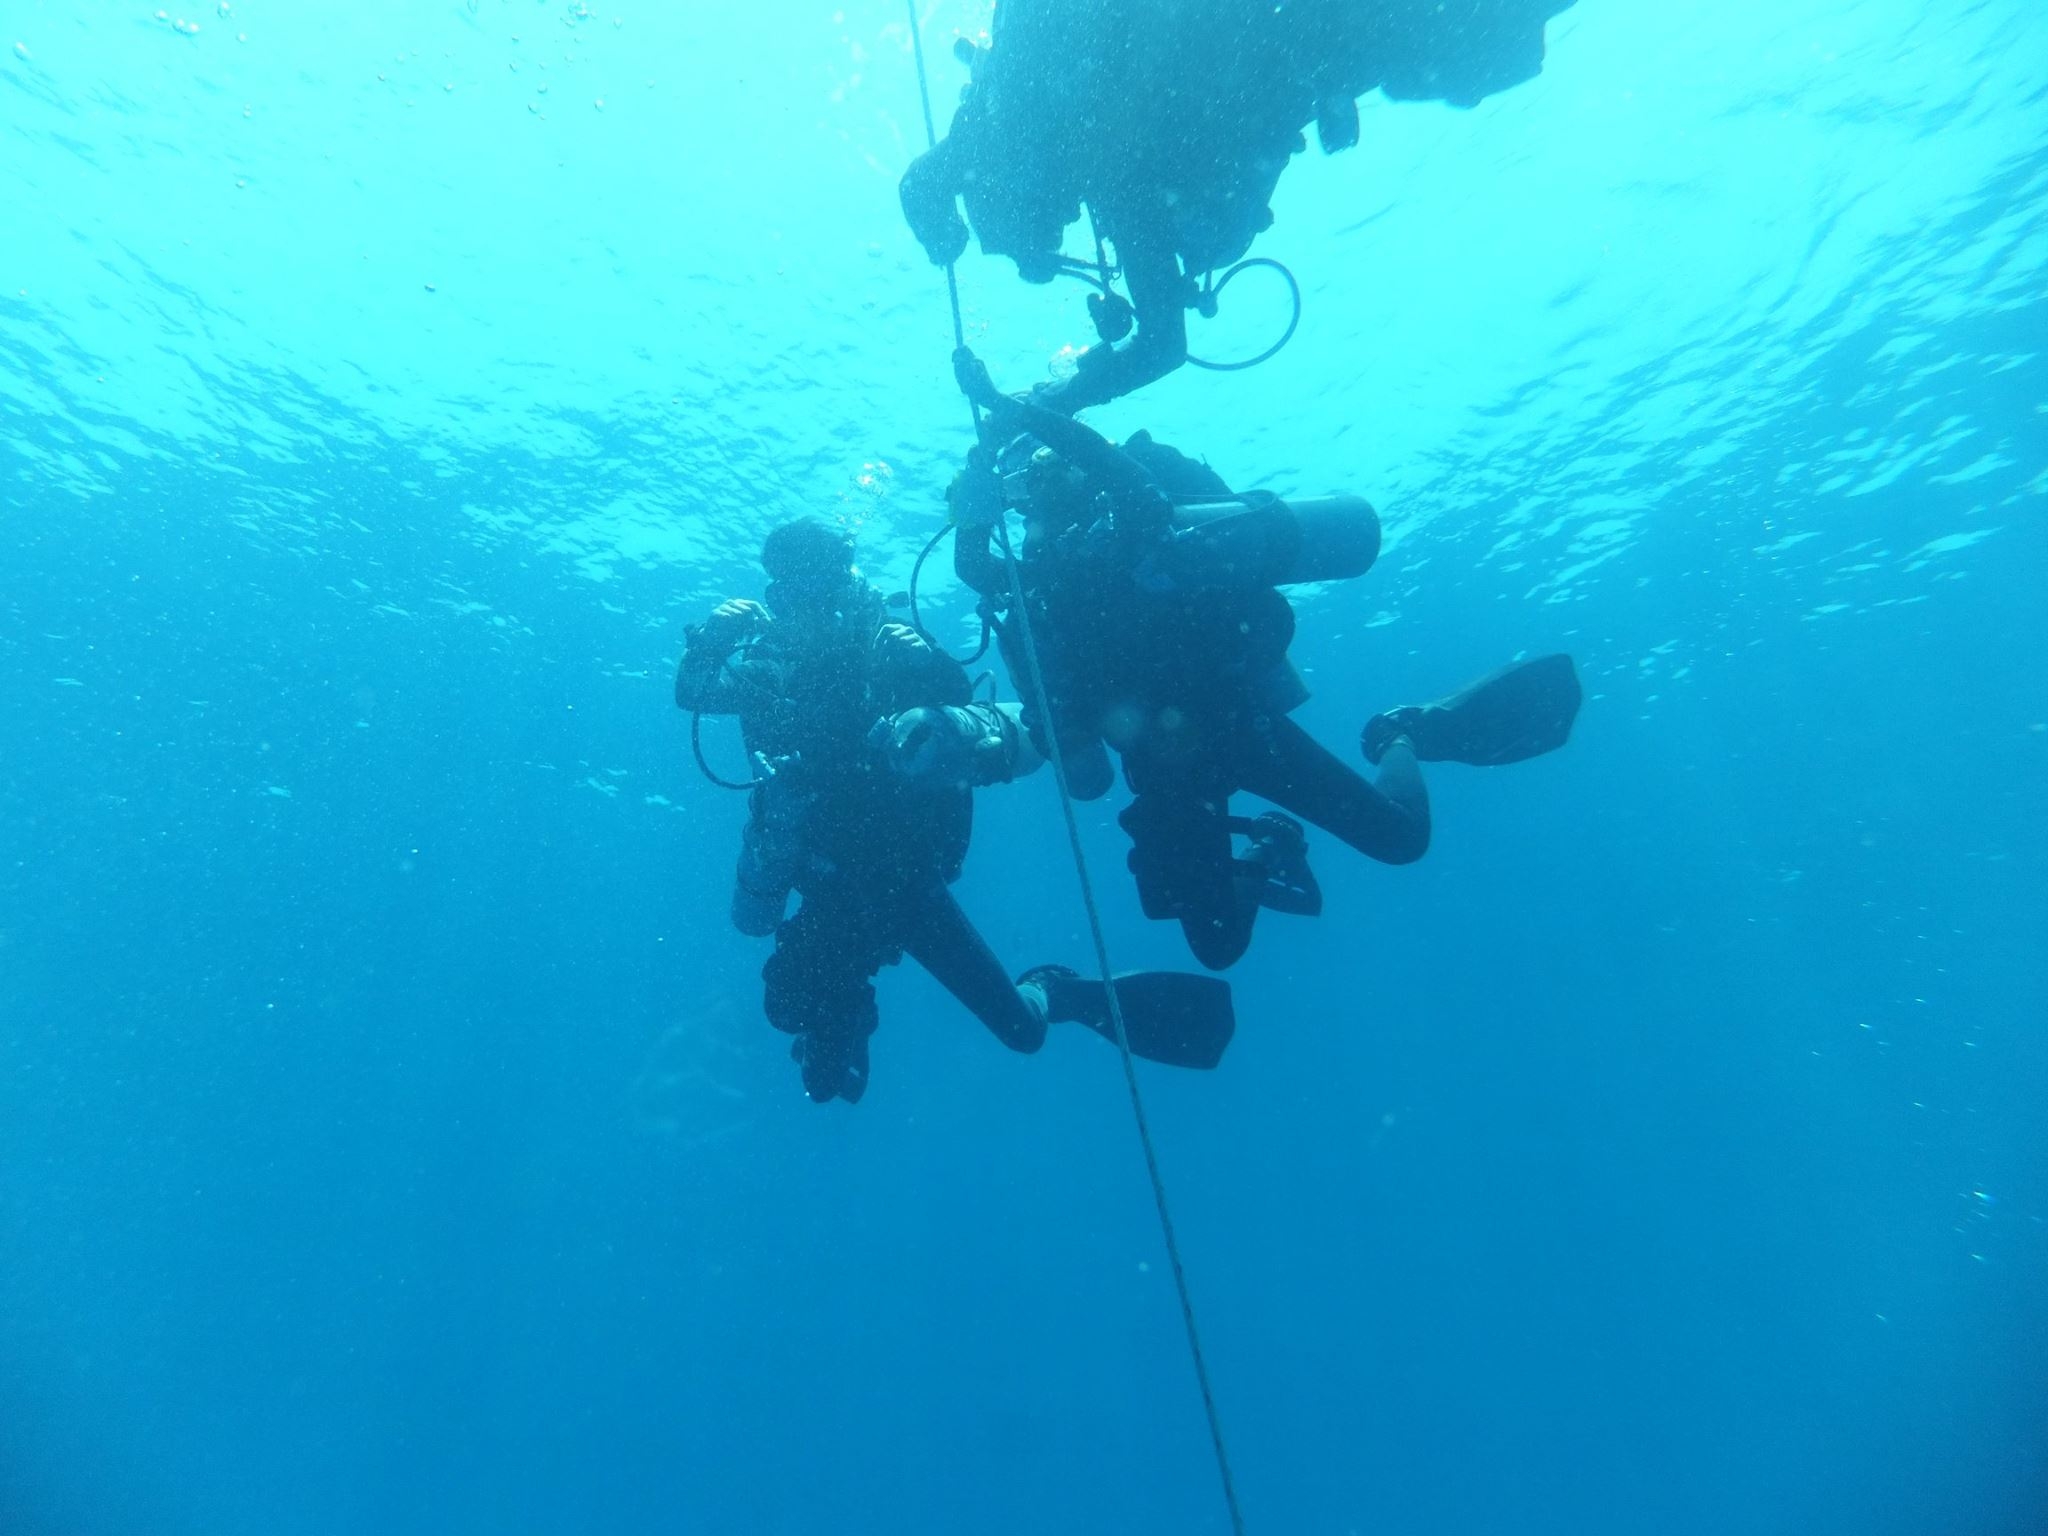 DJL tech crew near the surface